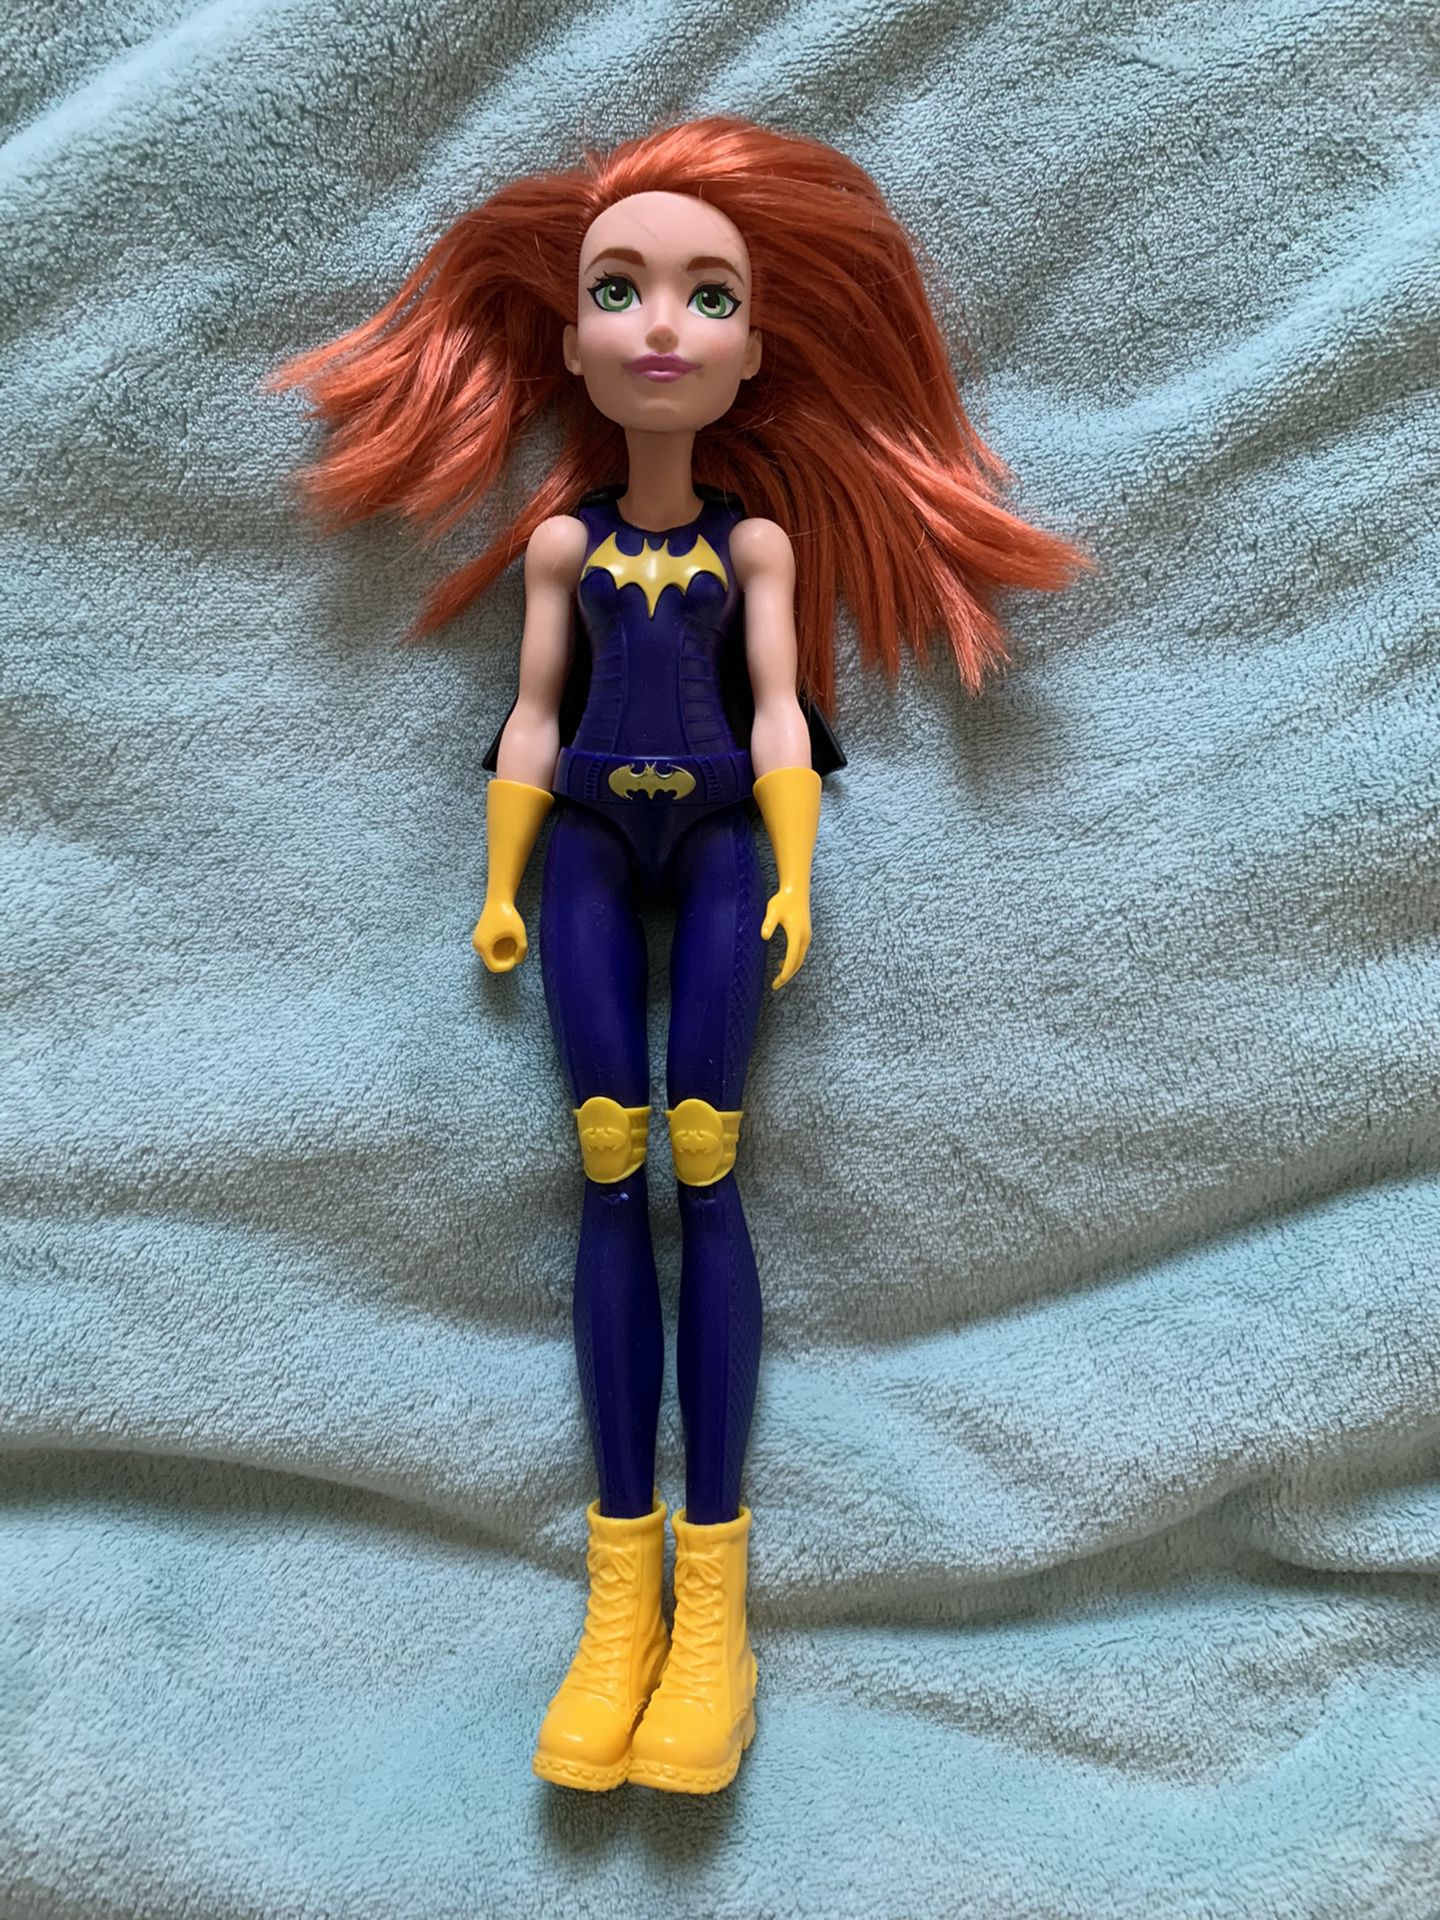 Still available: DC Super Hero Girls Batgirl 12-Inch Action Doll